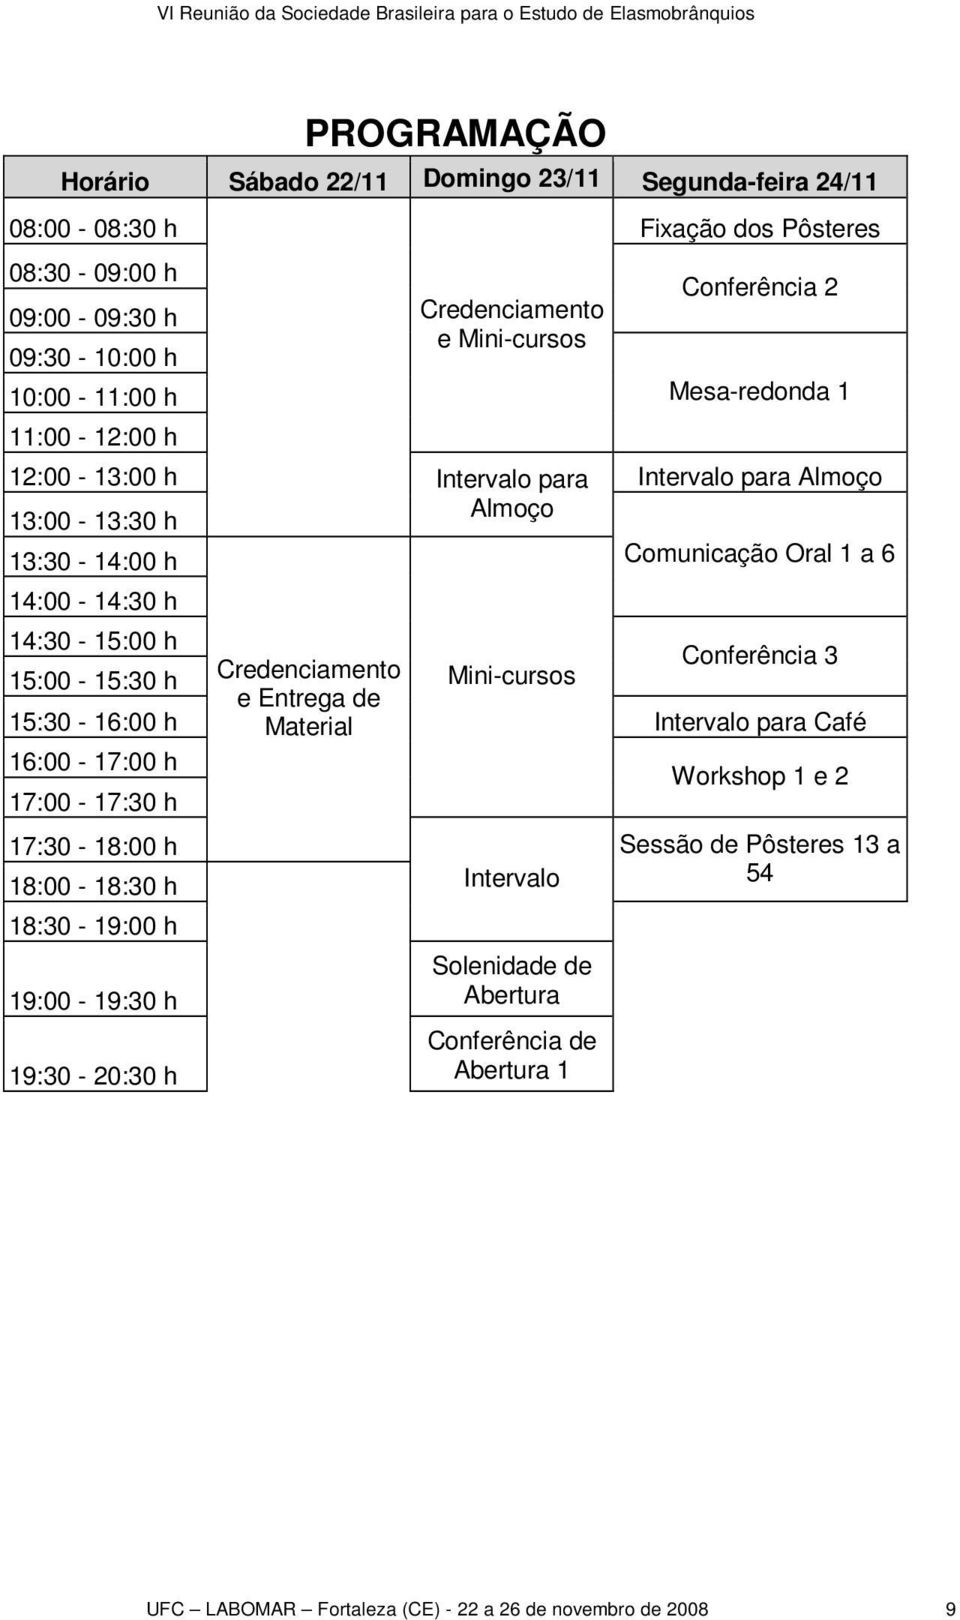 14:30-15:00 h Conferência 3 15:00-15:30 h Credenciamento Mini-cursos e Entrega de 15:30-16:00 h Material Intervalo para Café 16:00-17:00 h 17:00-17:30 h Workshop 1 e 2 17:30-18:00 h